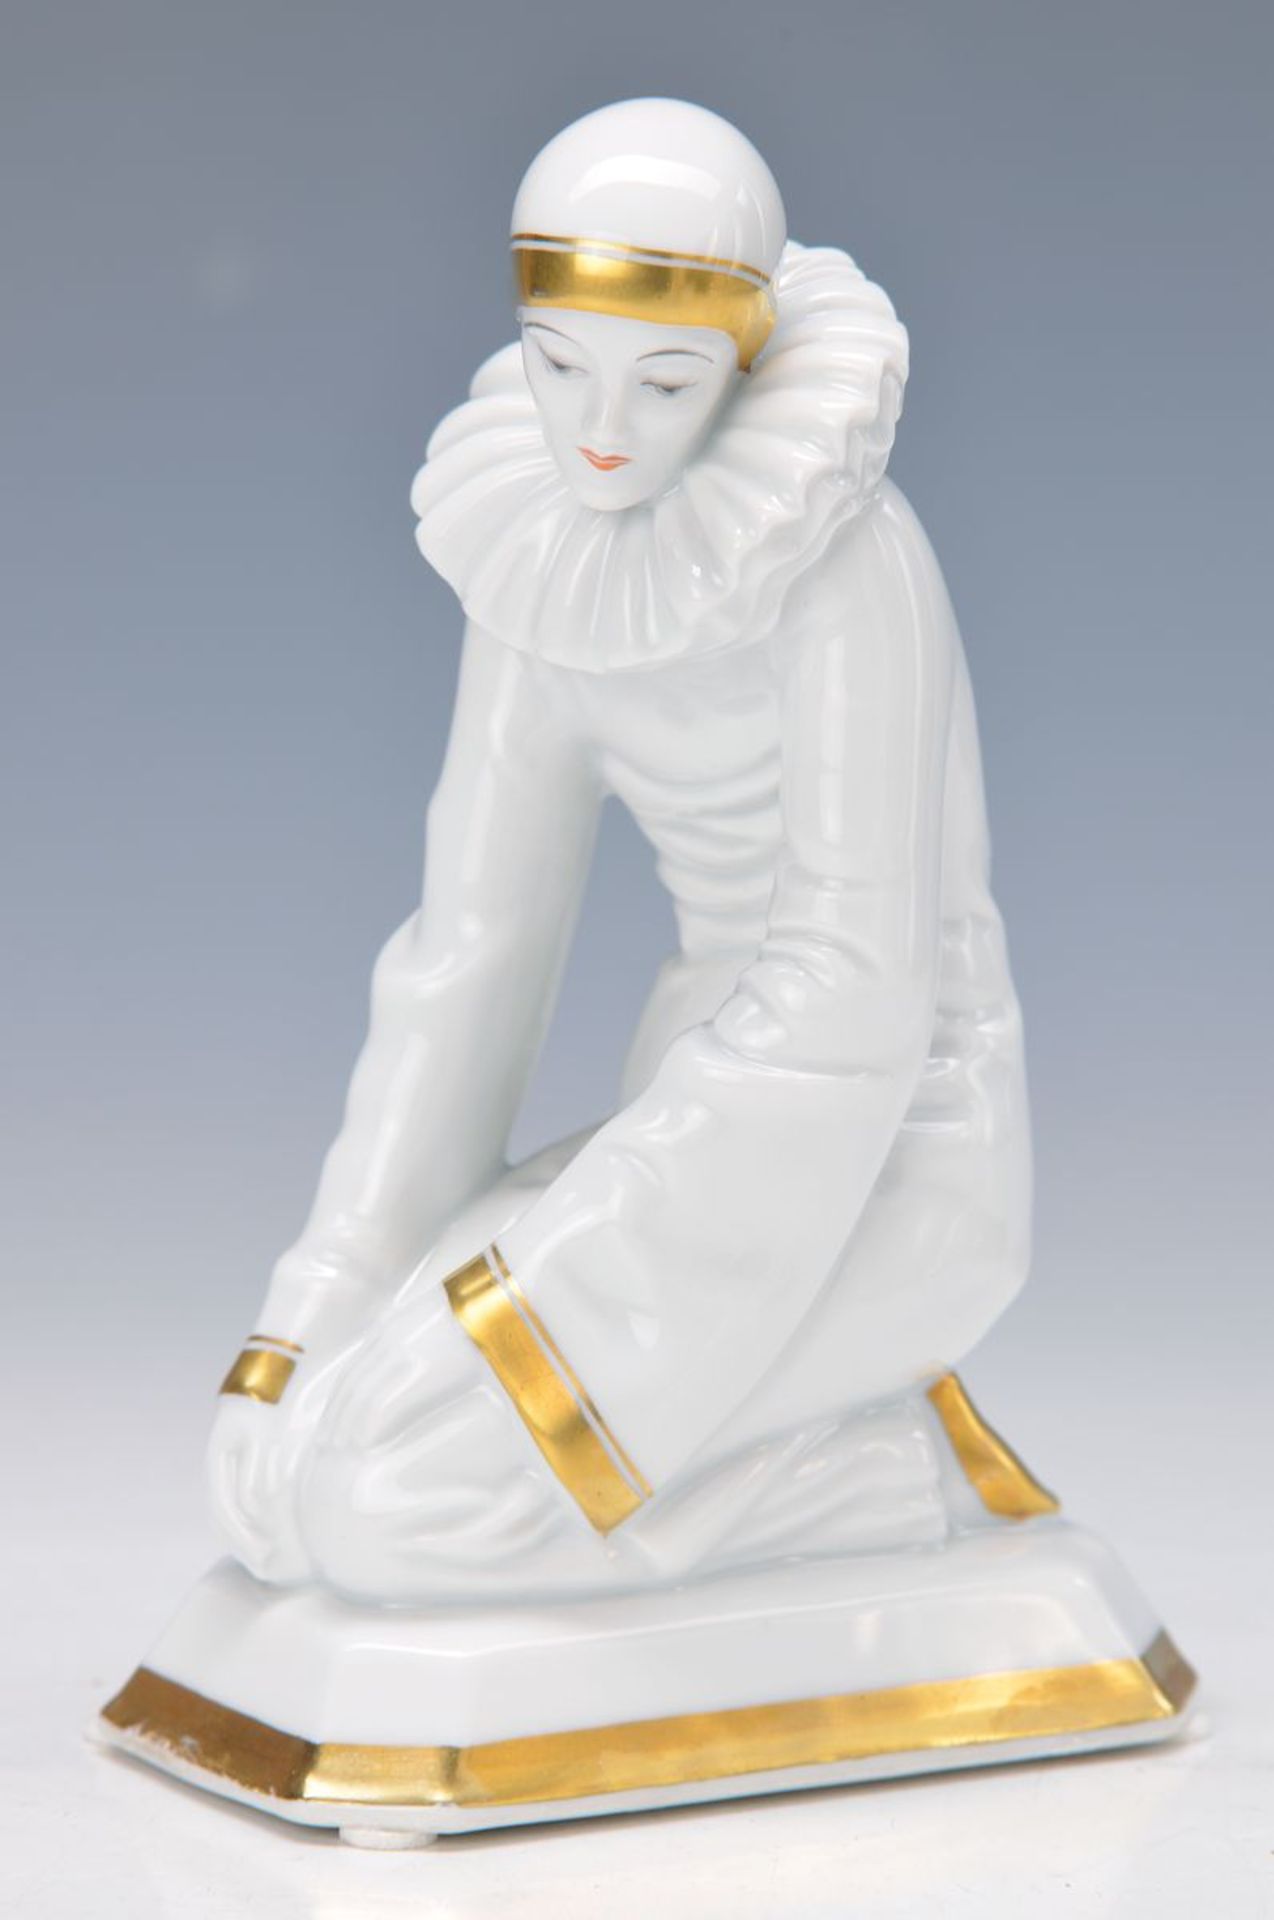 Porzellanfigur, Rosenthal, Entwurf Dorothea Charol, um 1927, sitzender Pierrot, Goldstaffage, 1930er